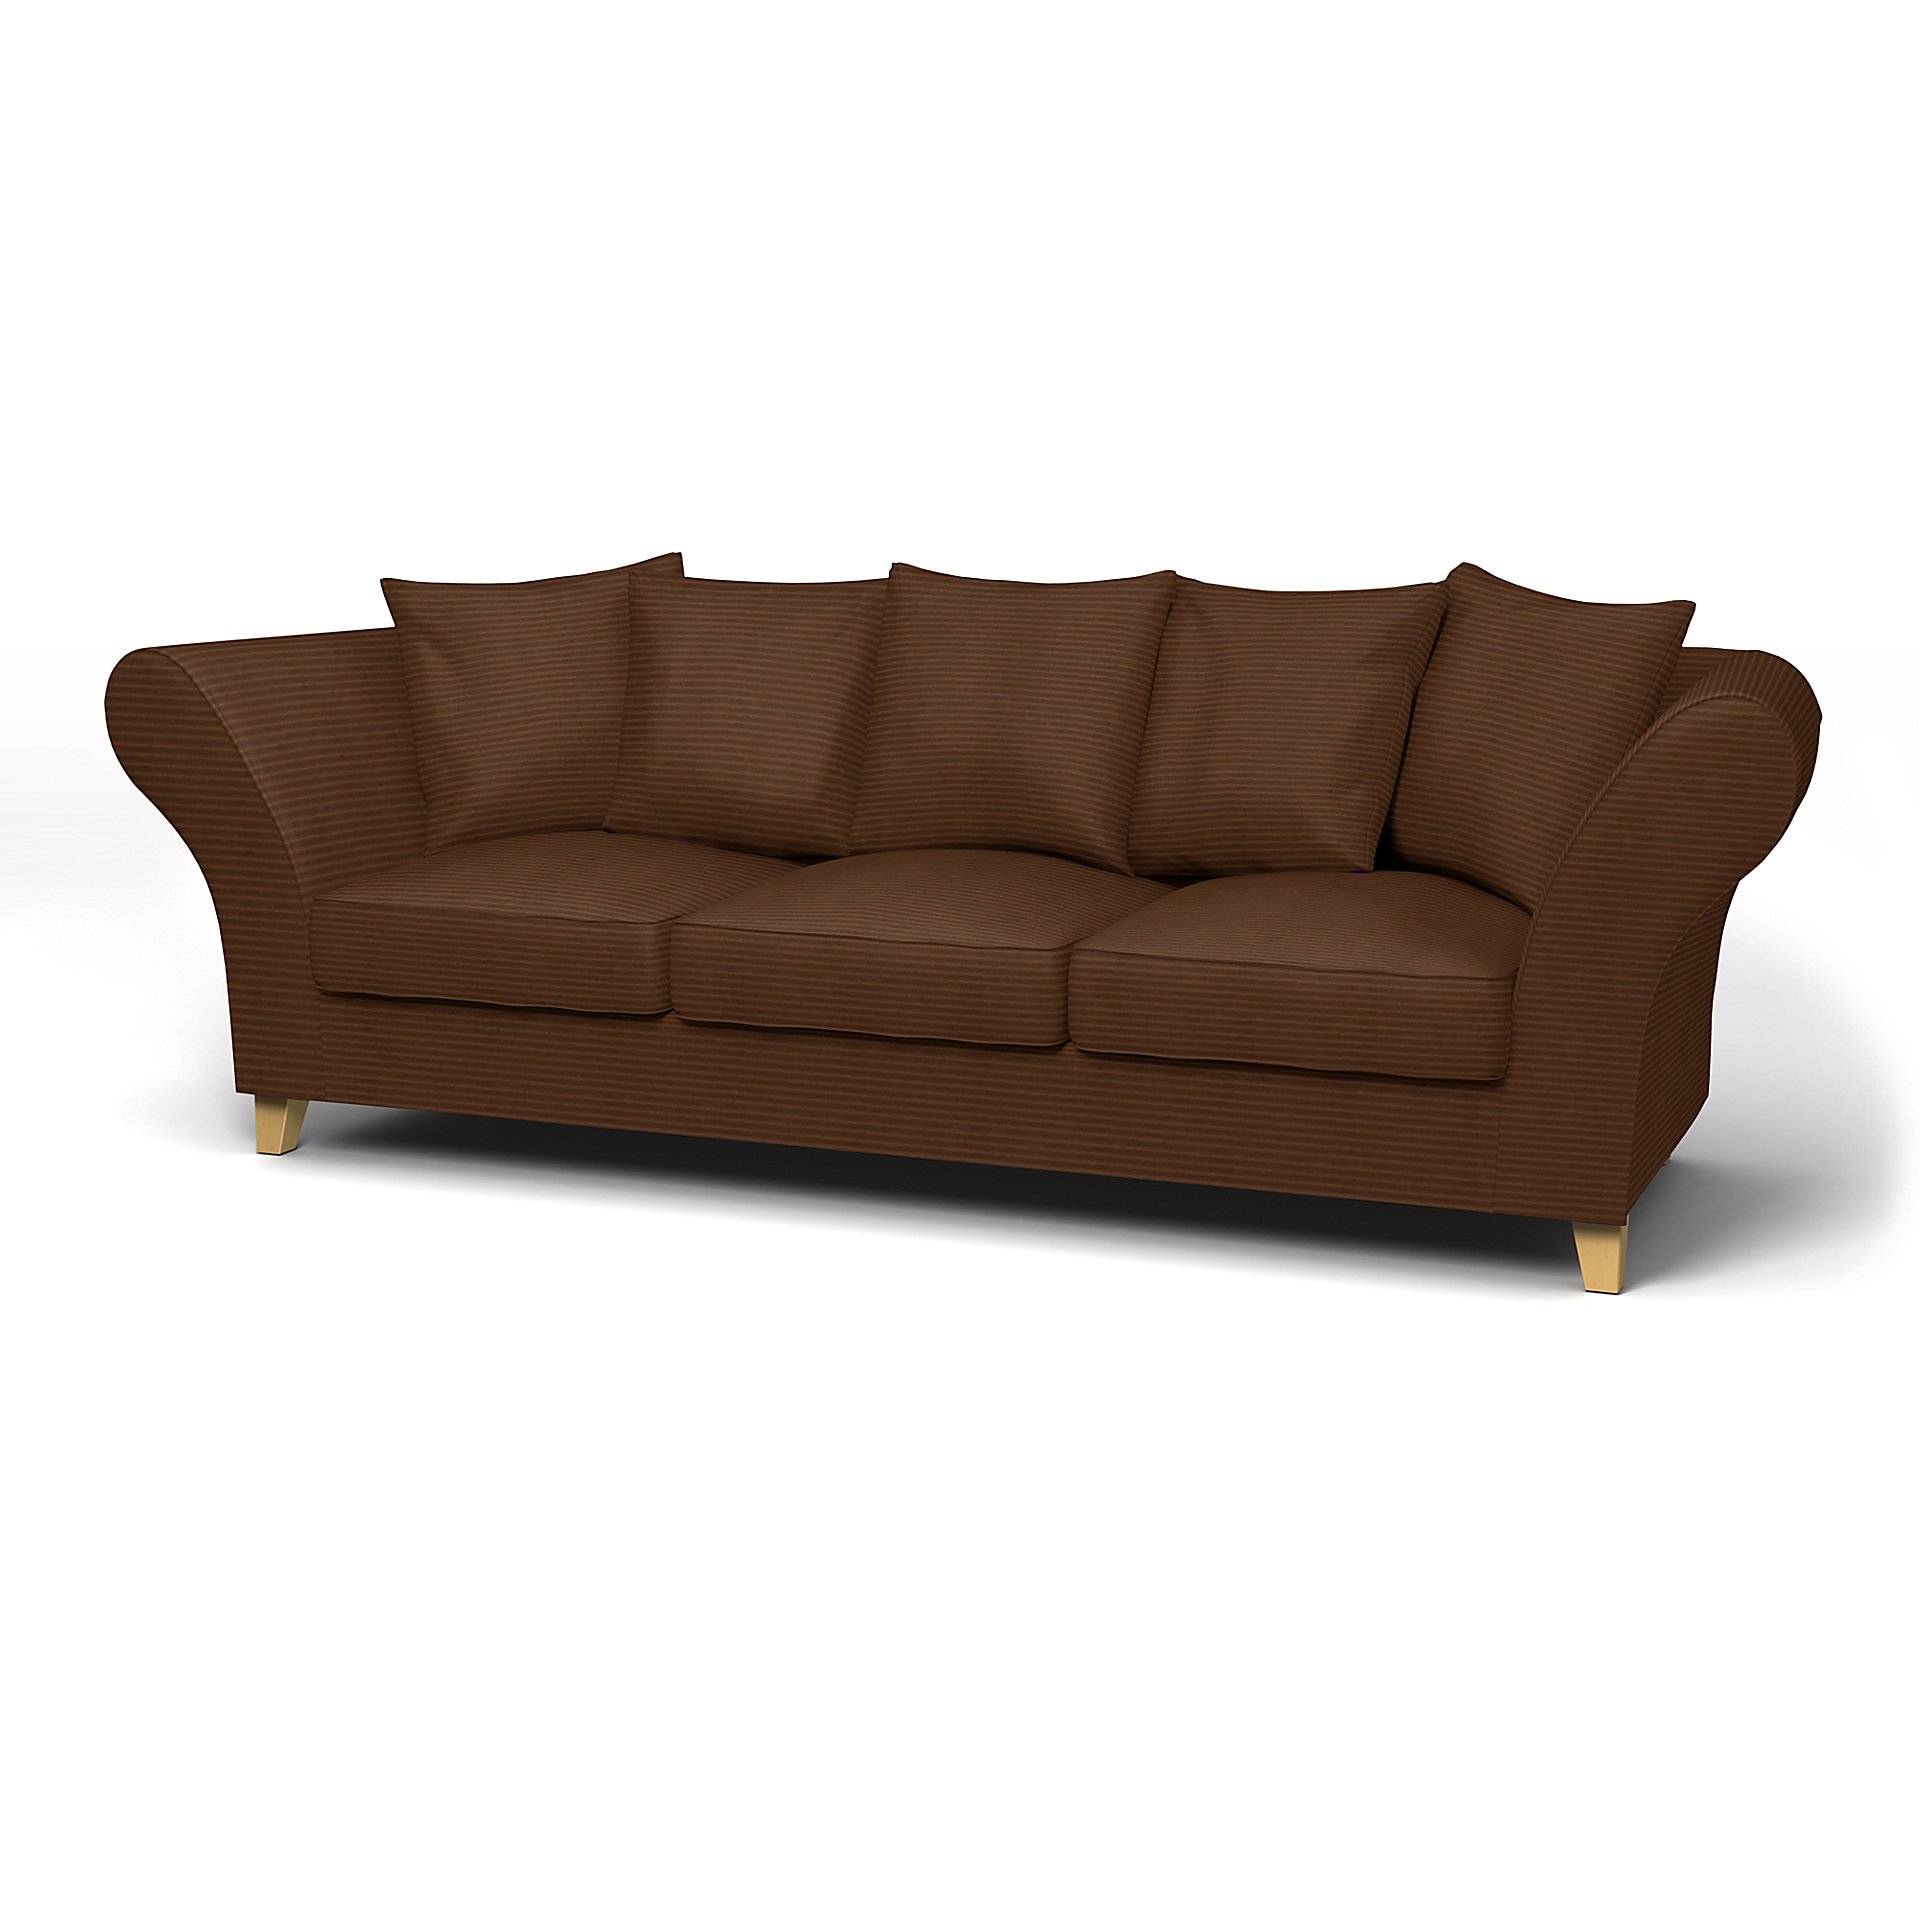 IKEA - Backa 3.5 Seater Sofa Cover, Chocolate Brown, Corduroy - Bemz